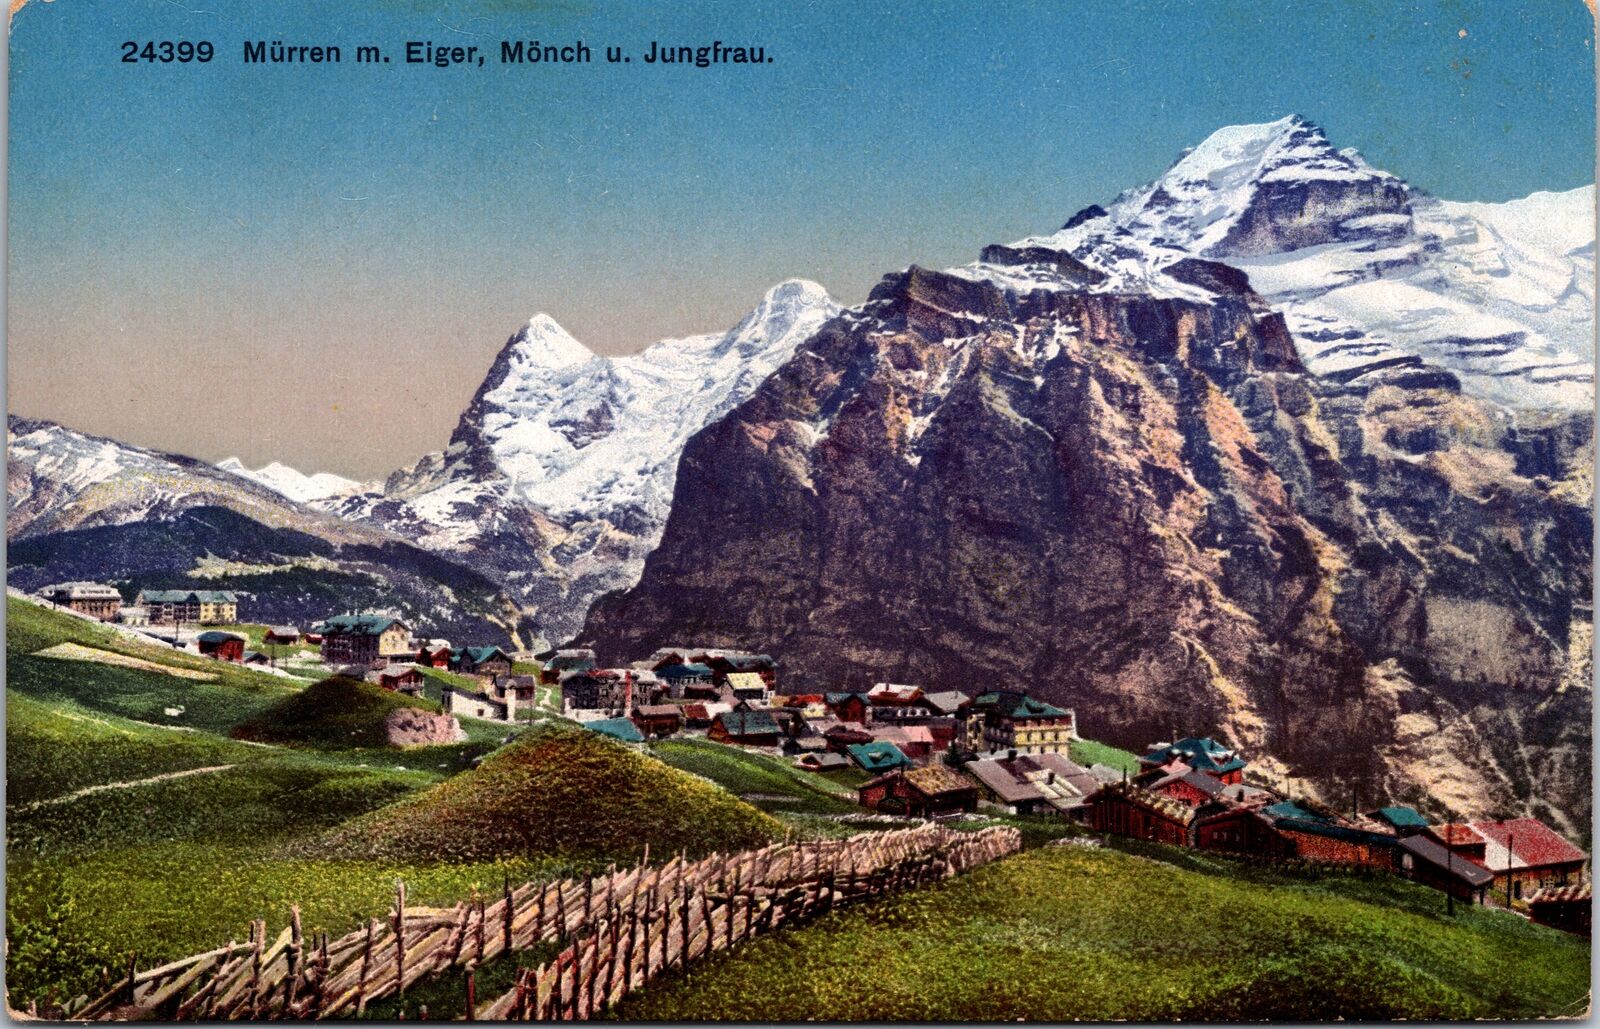 VINTAGE POSTCARD SWISS MOUNTAIN VILLAGE OF MURREN IN THE JUNGFRAU RANGE c. 1905